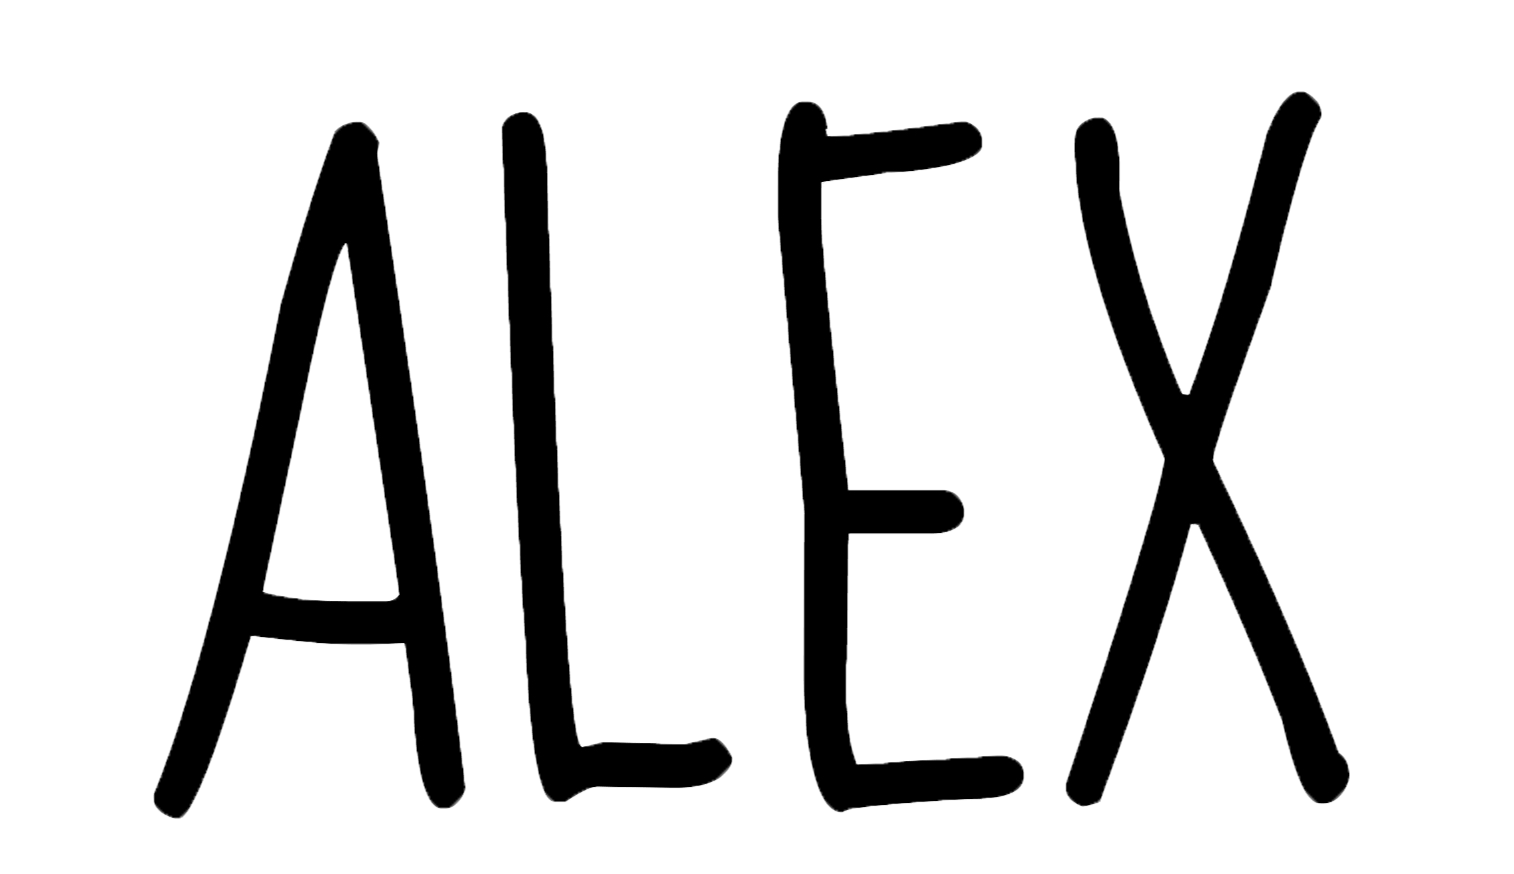 Alex Logo - LogoDix